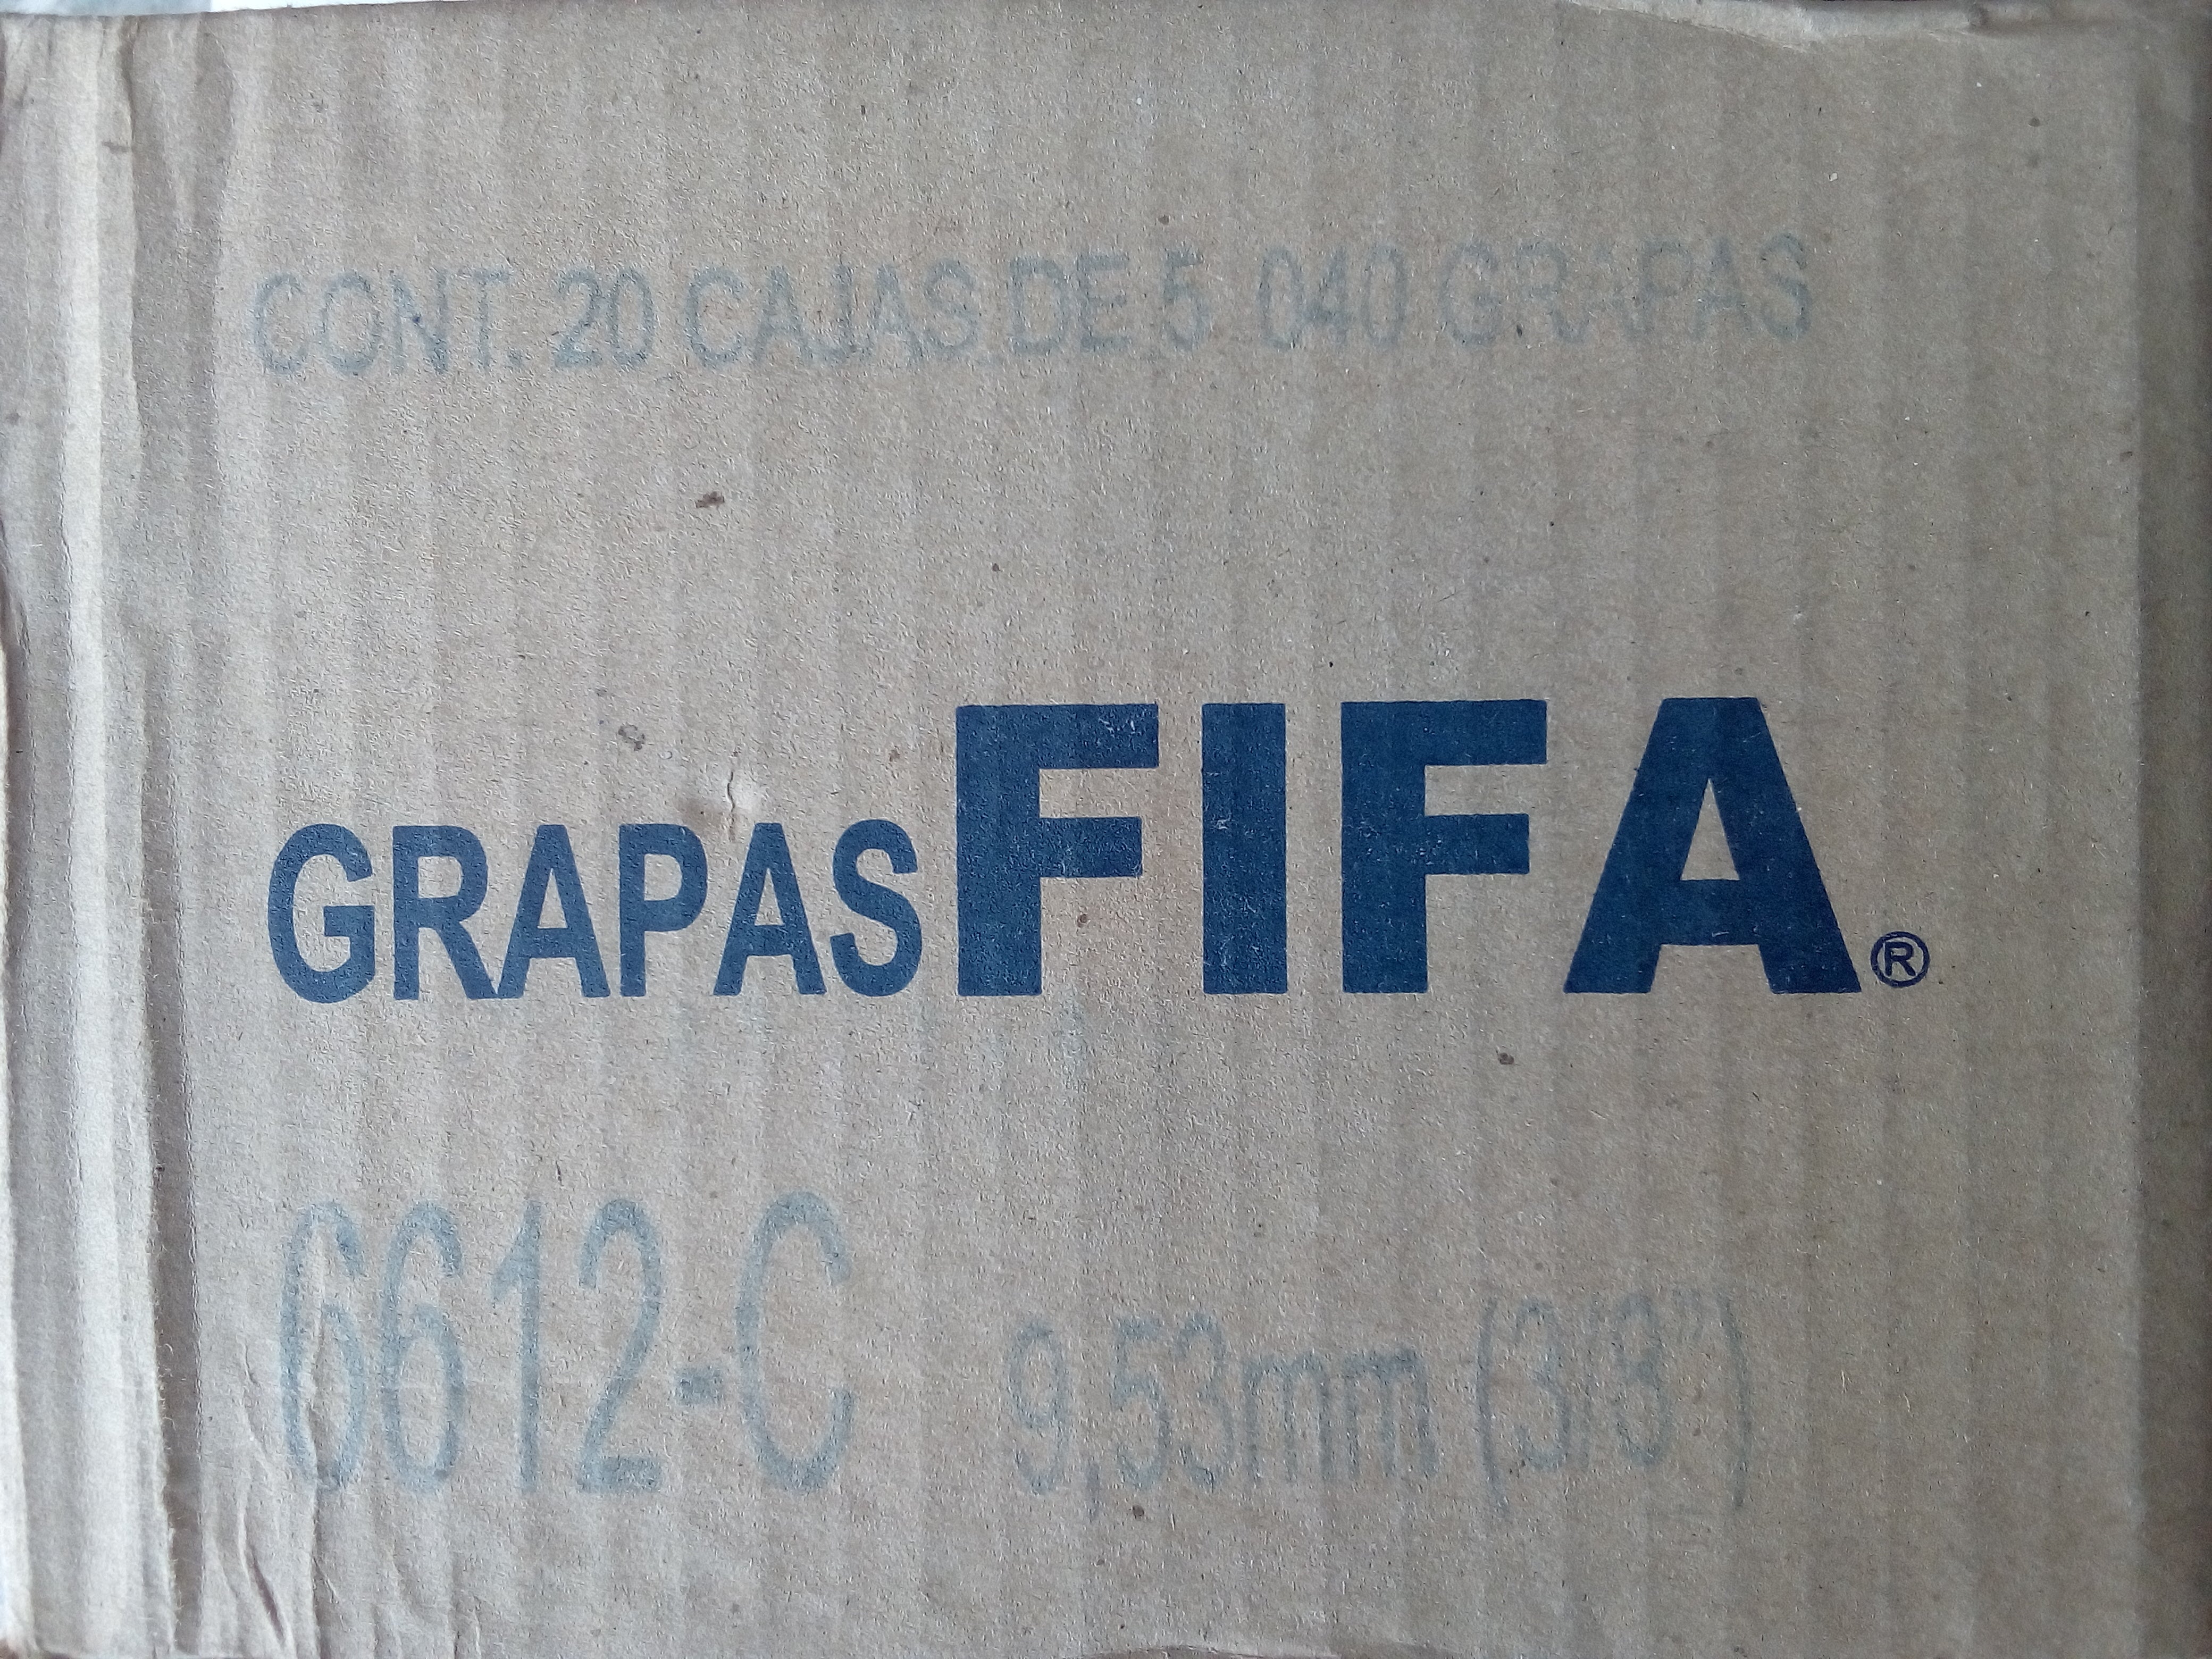 Grapas Fifa 6612-C